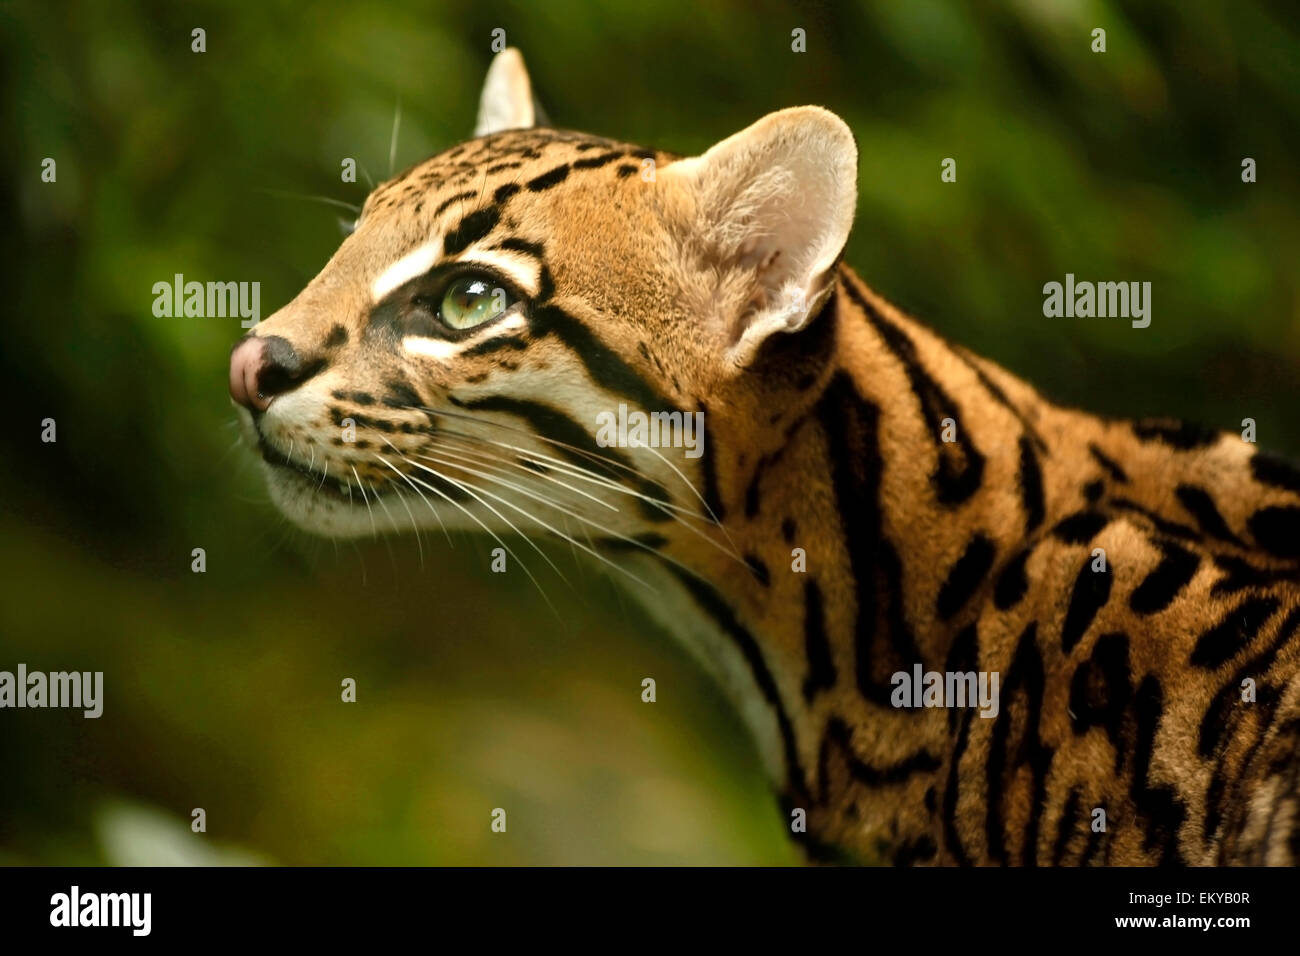 Ocelot (Leopardus pardalis) close up portraits in a natural light Stock Photo